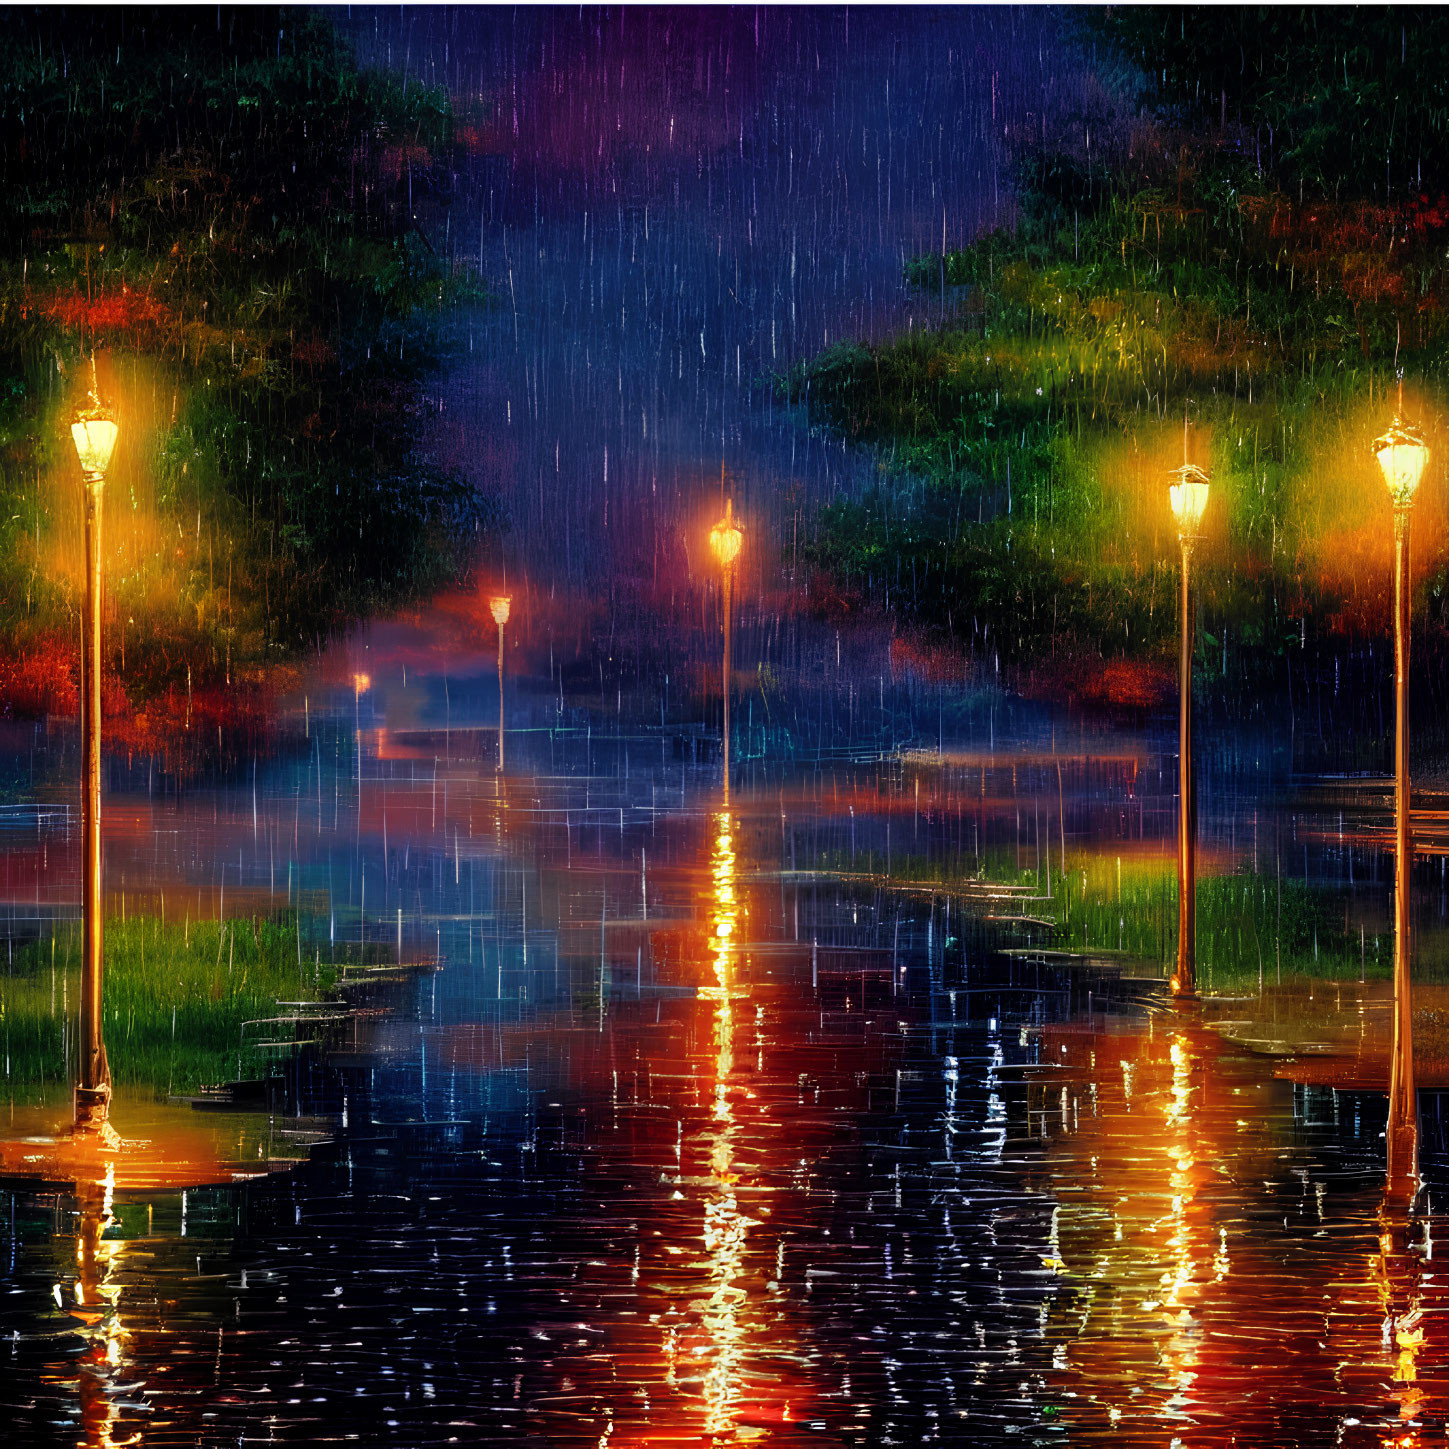 Rainy Night Scene with Illuminated Street Lamps